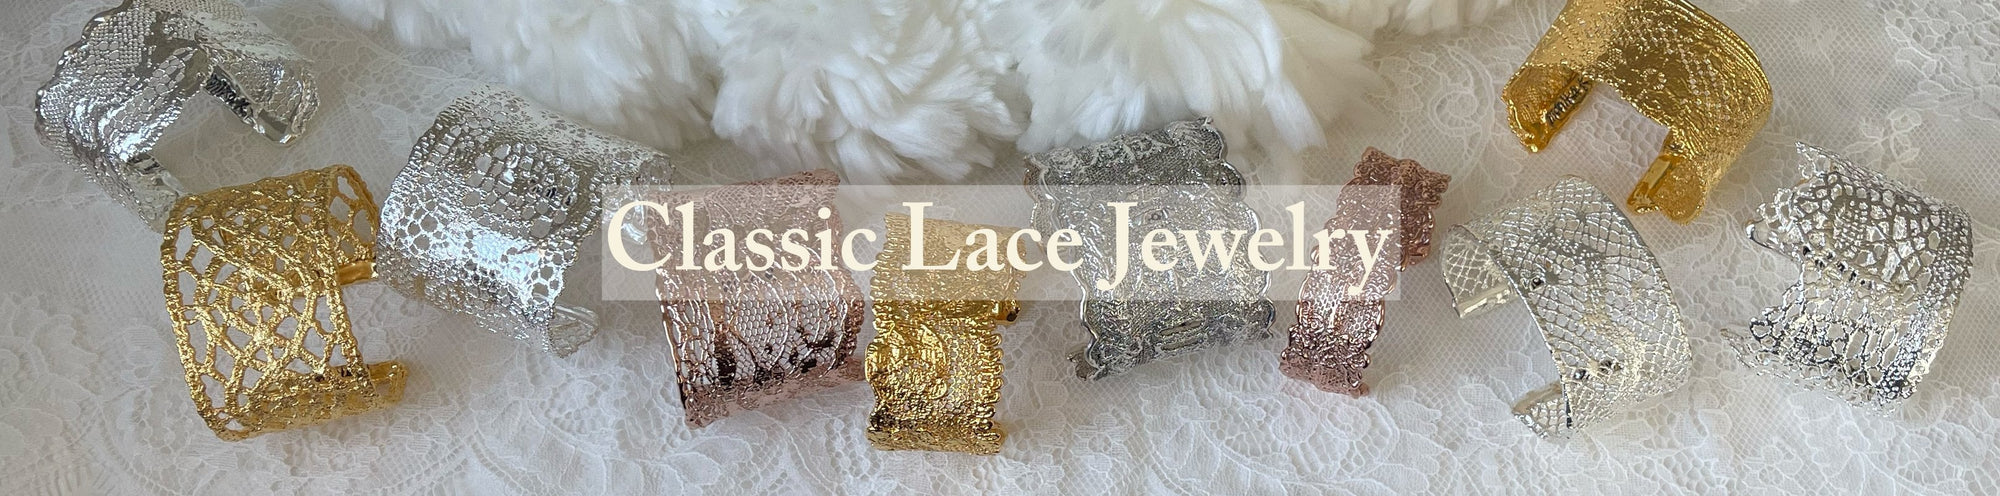 Classic Lace Jewelry